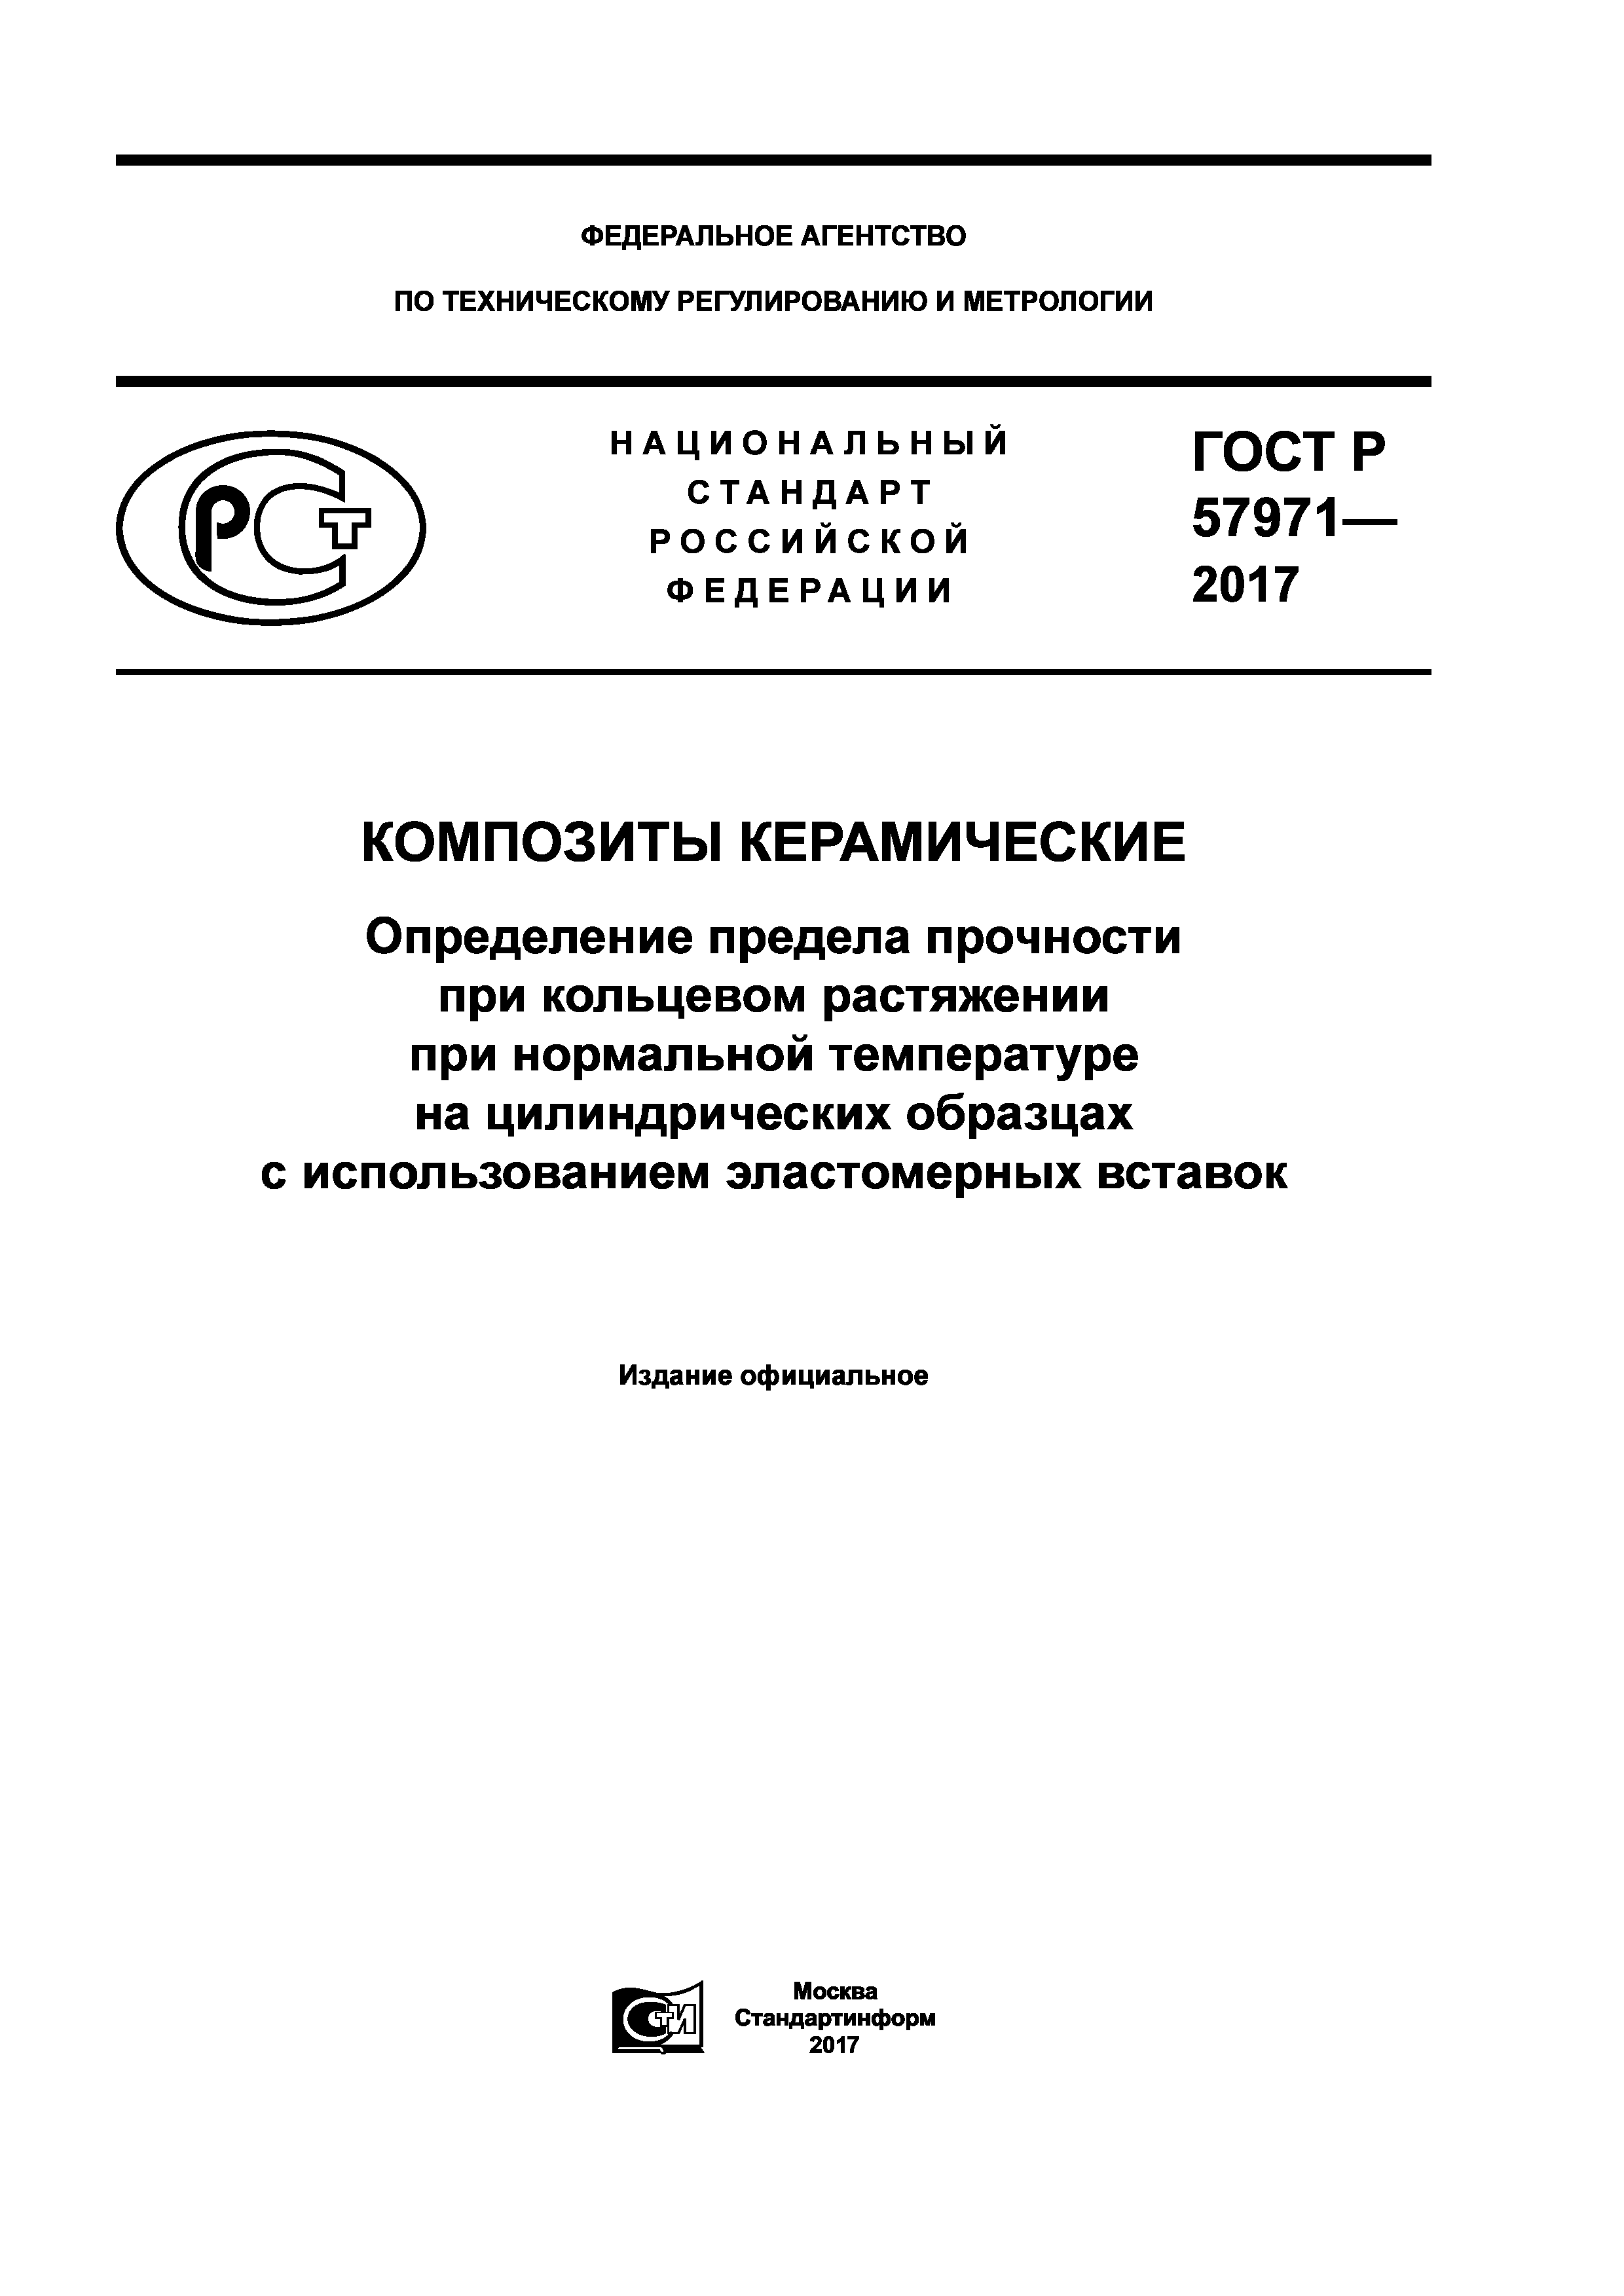 ГОСТ Р 57971-2017